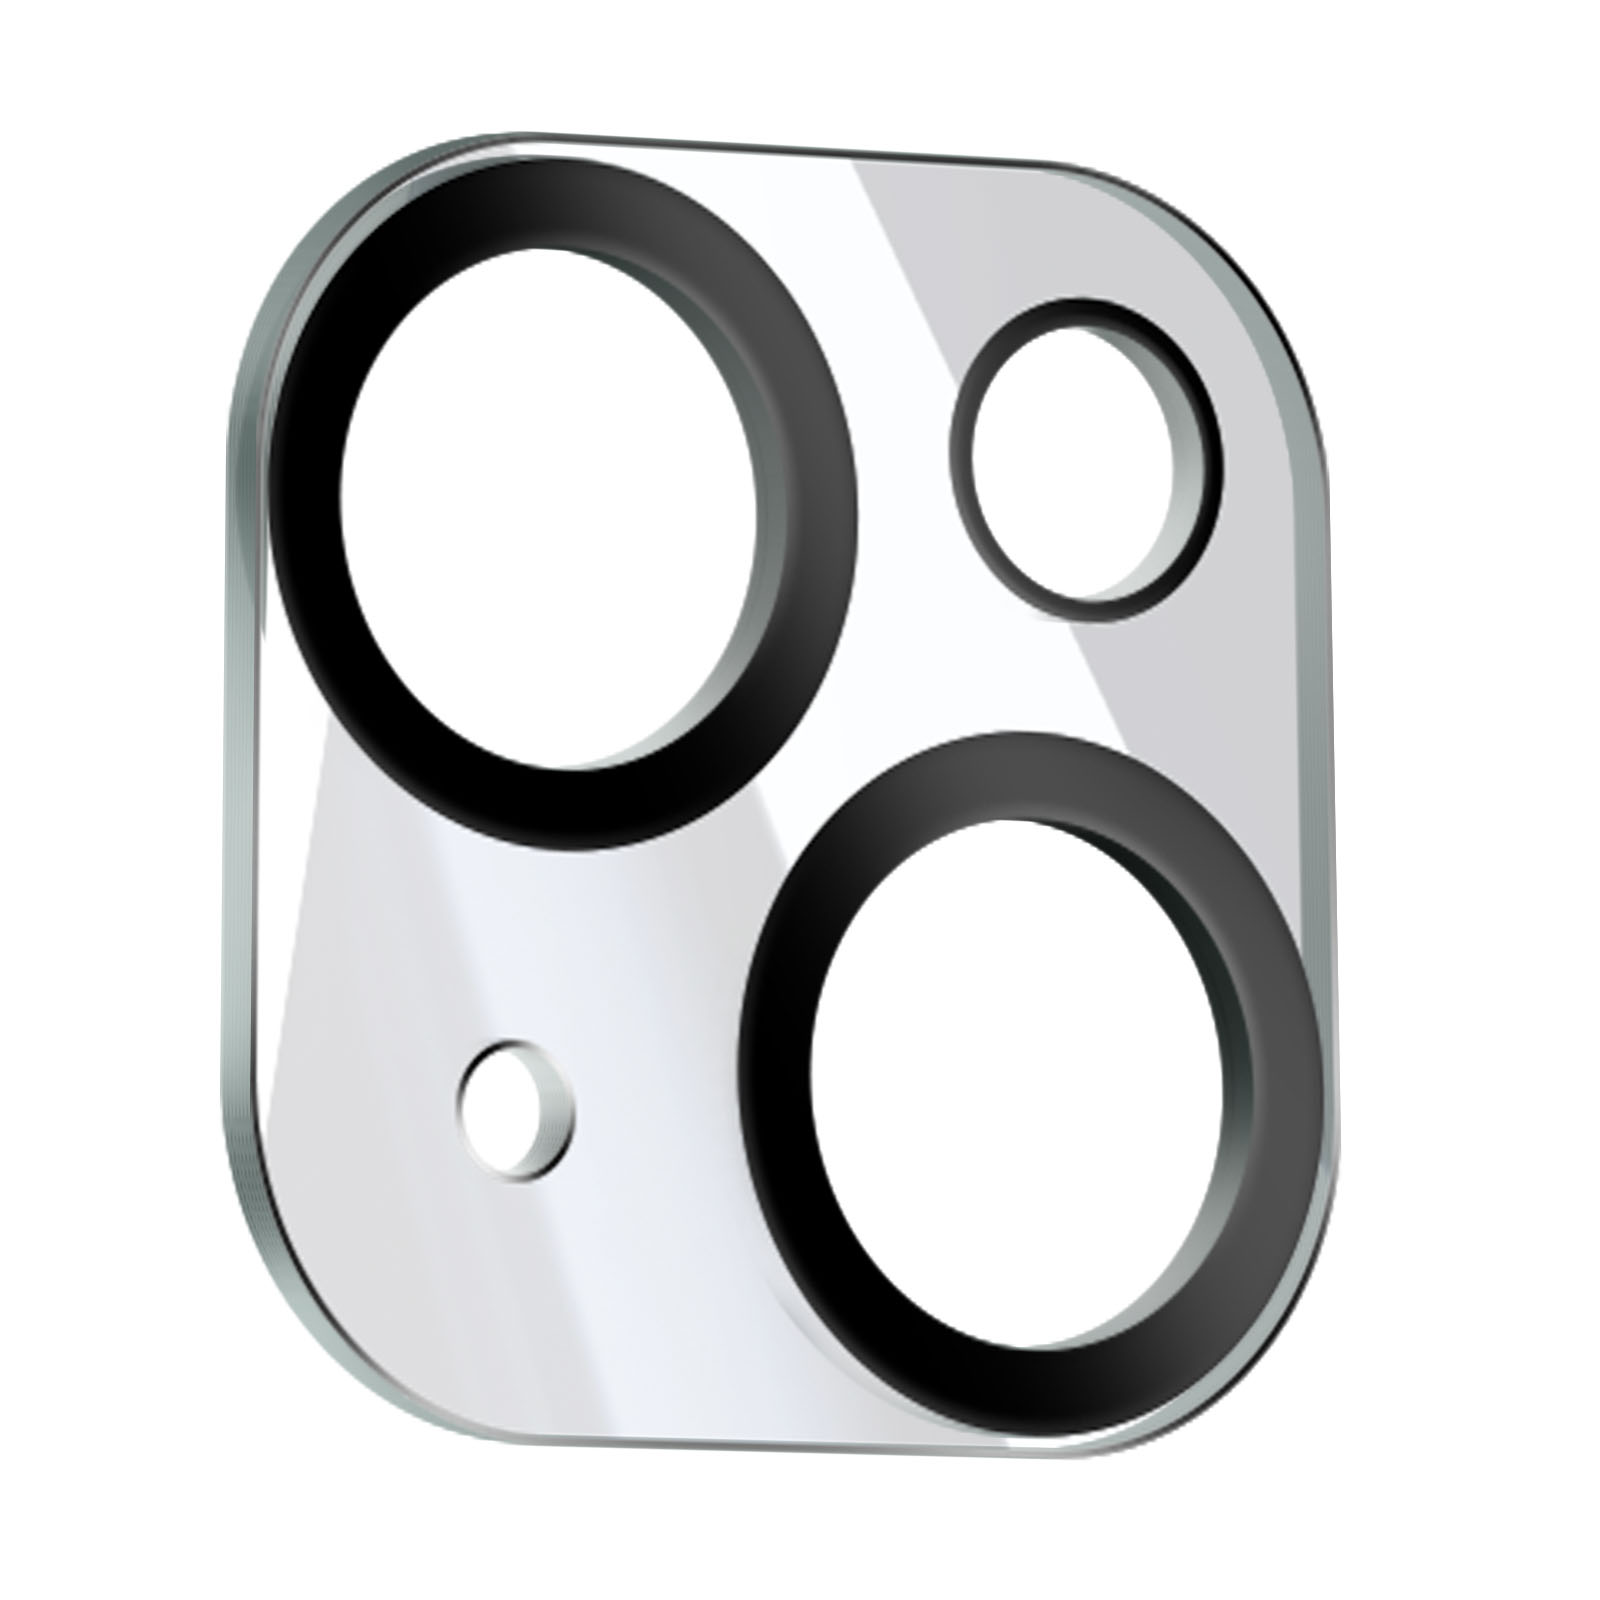 Apple iPhone 9H Kamerafolie Glas Folien(für Plus) ENKAY Rückkamera 15